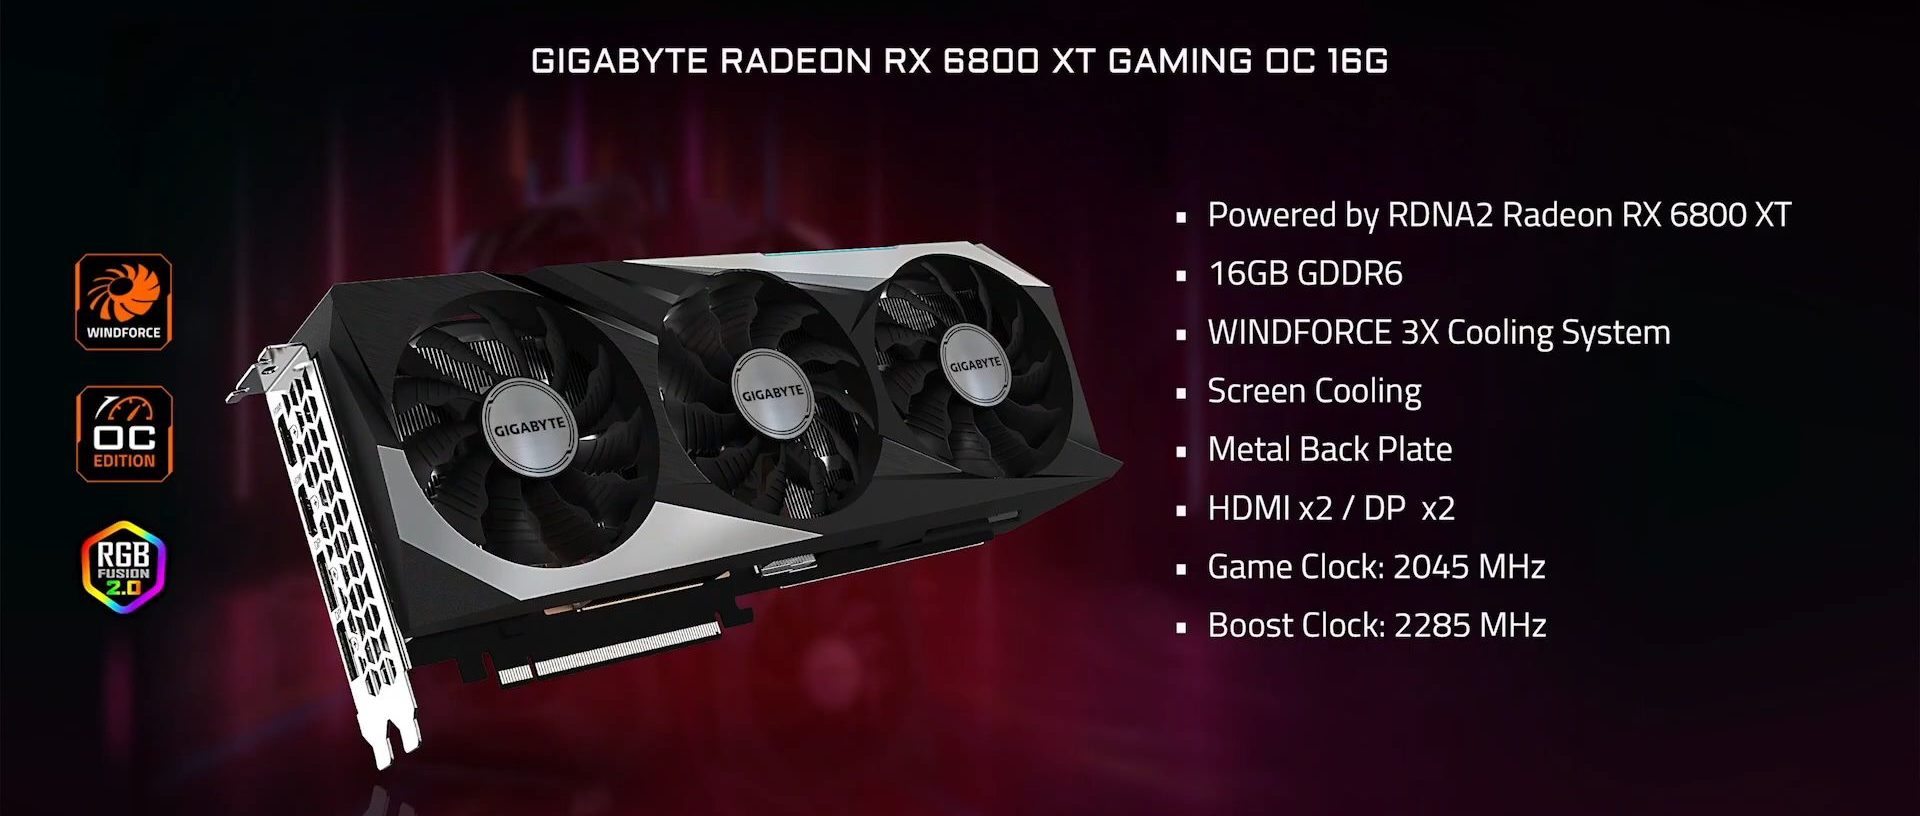 GIGABYTE AMD Radeon RX 6800 XT MASTER 16GB GDDR6 Graphic Card for